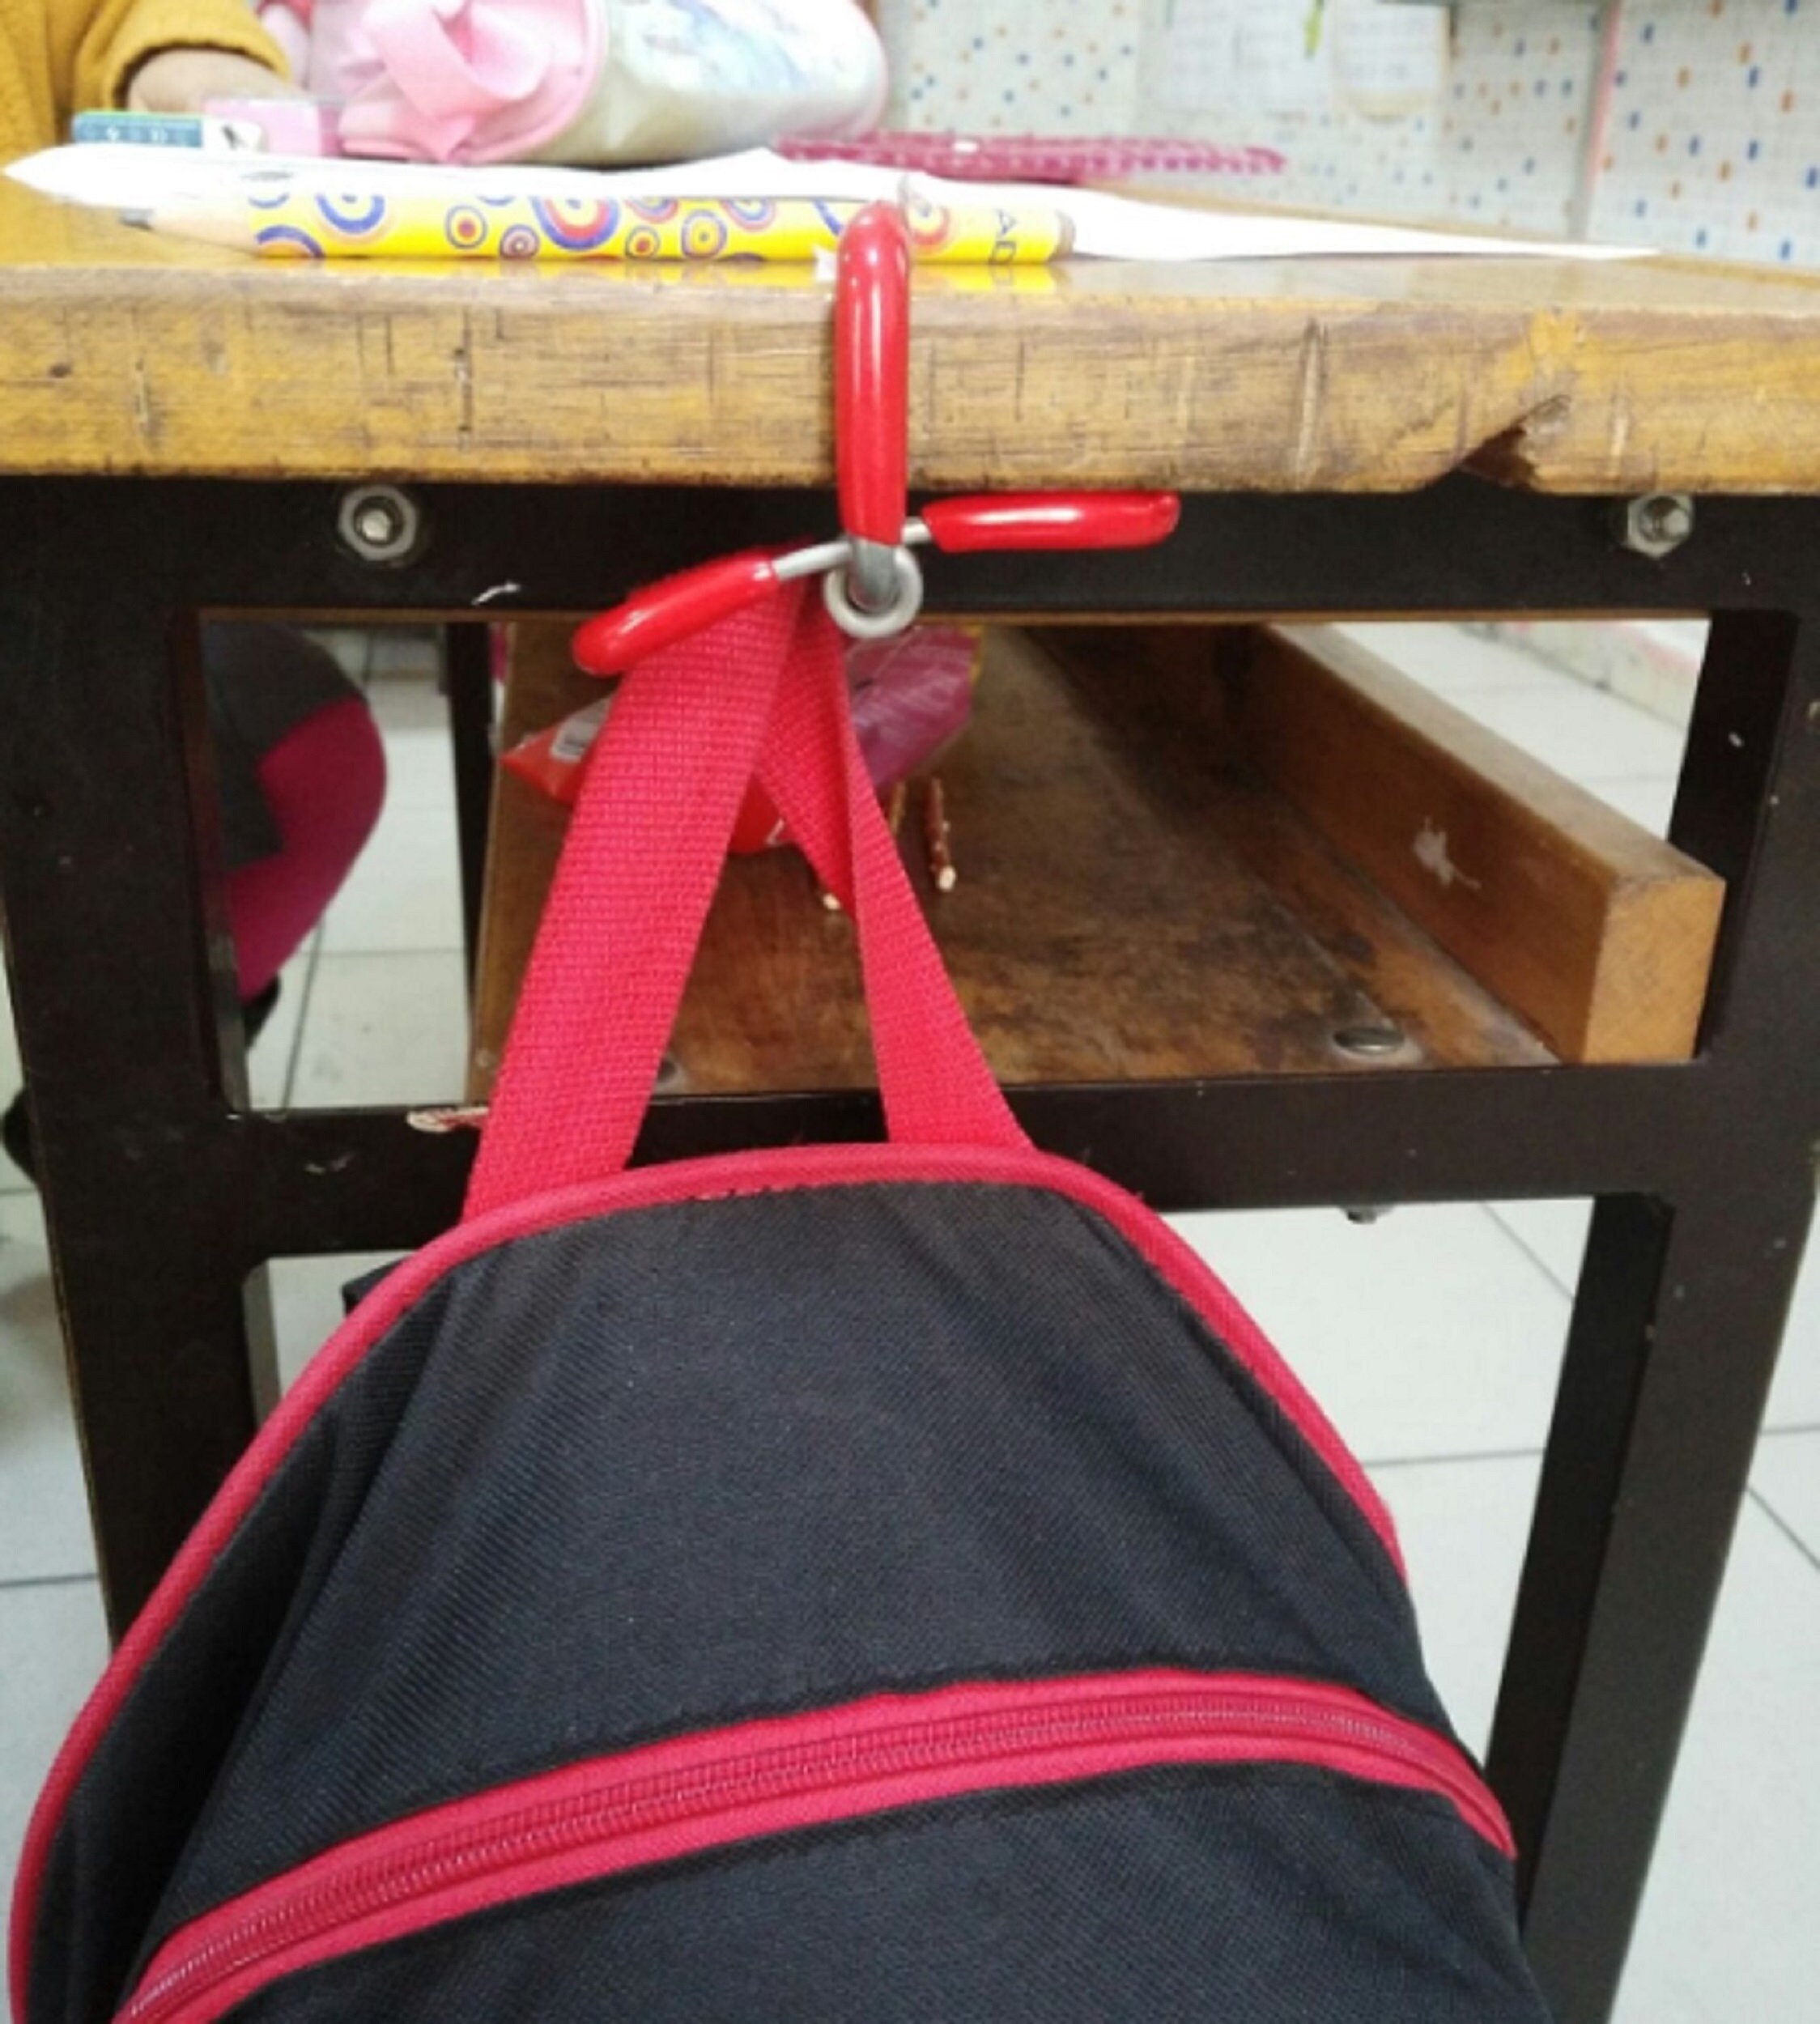 Cartoon Detachable Purse Handbag Hook Portable Table Desk School Bag Holder  Cute Hanger, 1 Piece 